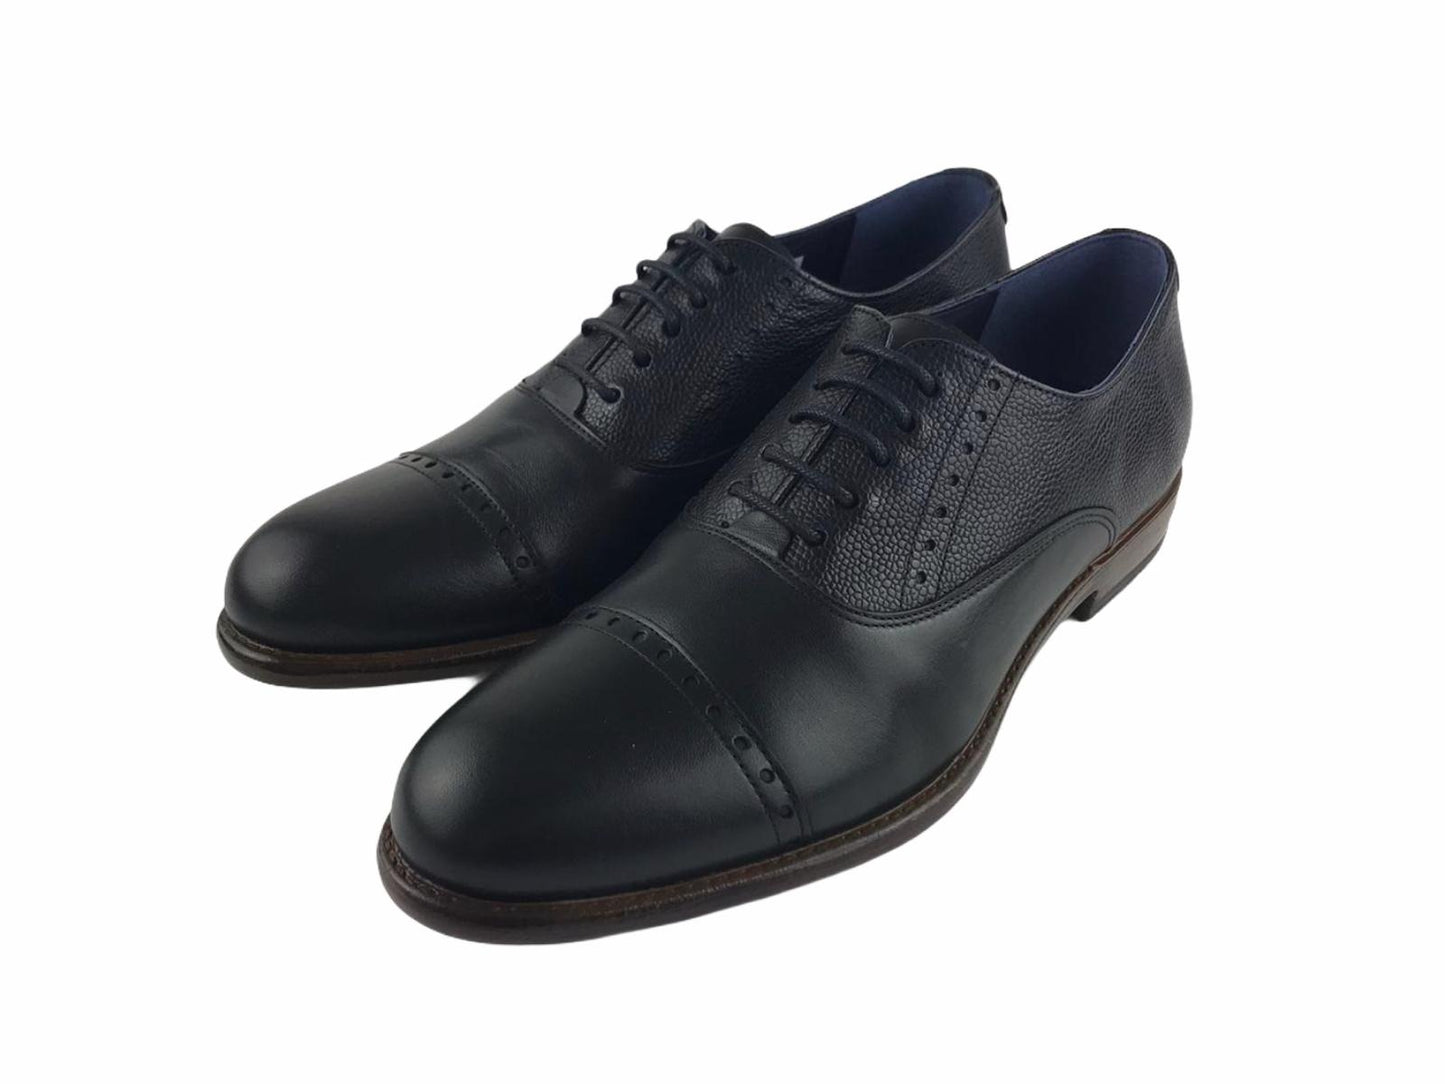 Tolino | Zapato hombre vestir Toledano negro